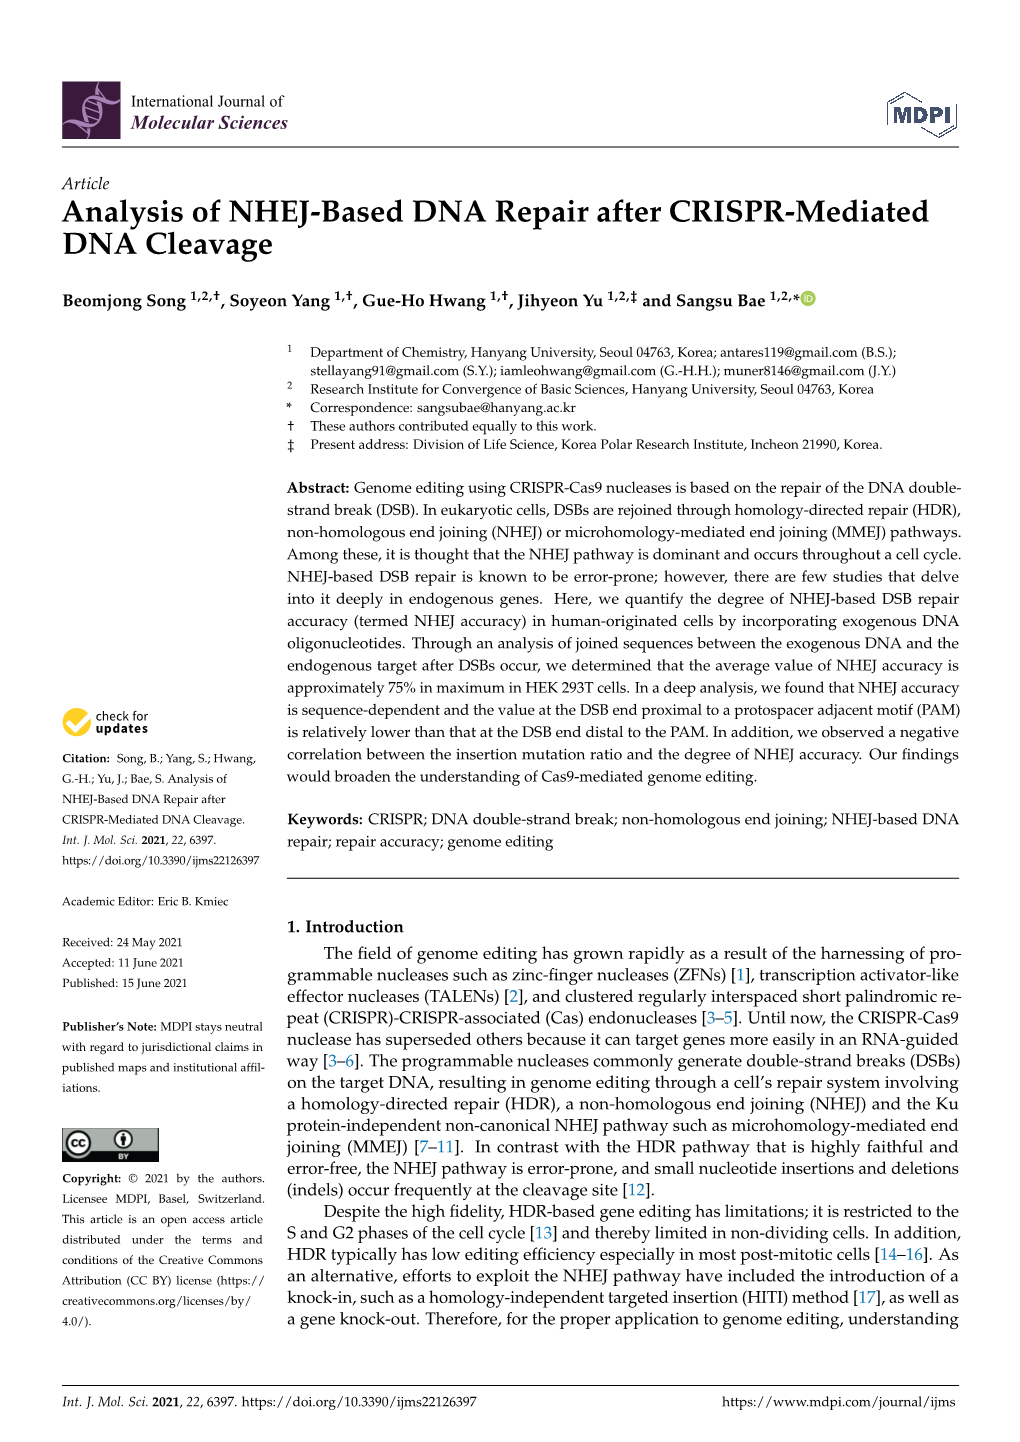 Analysis of NHEJ-Based DNA Repair After CRISPR-Mediated DNA Cleavage